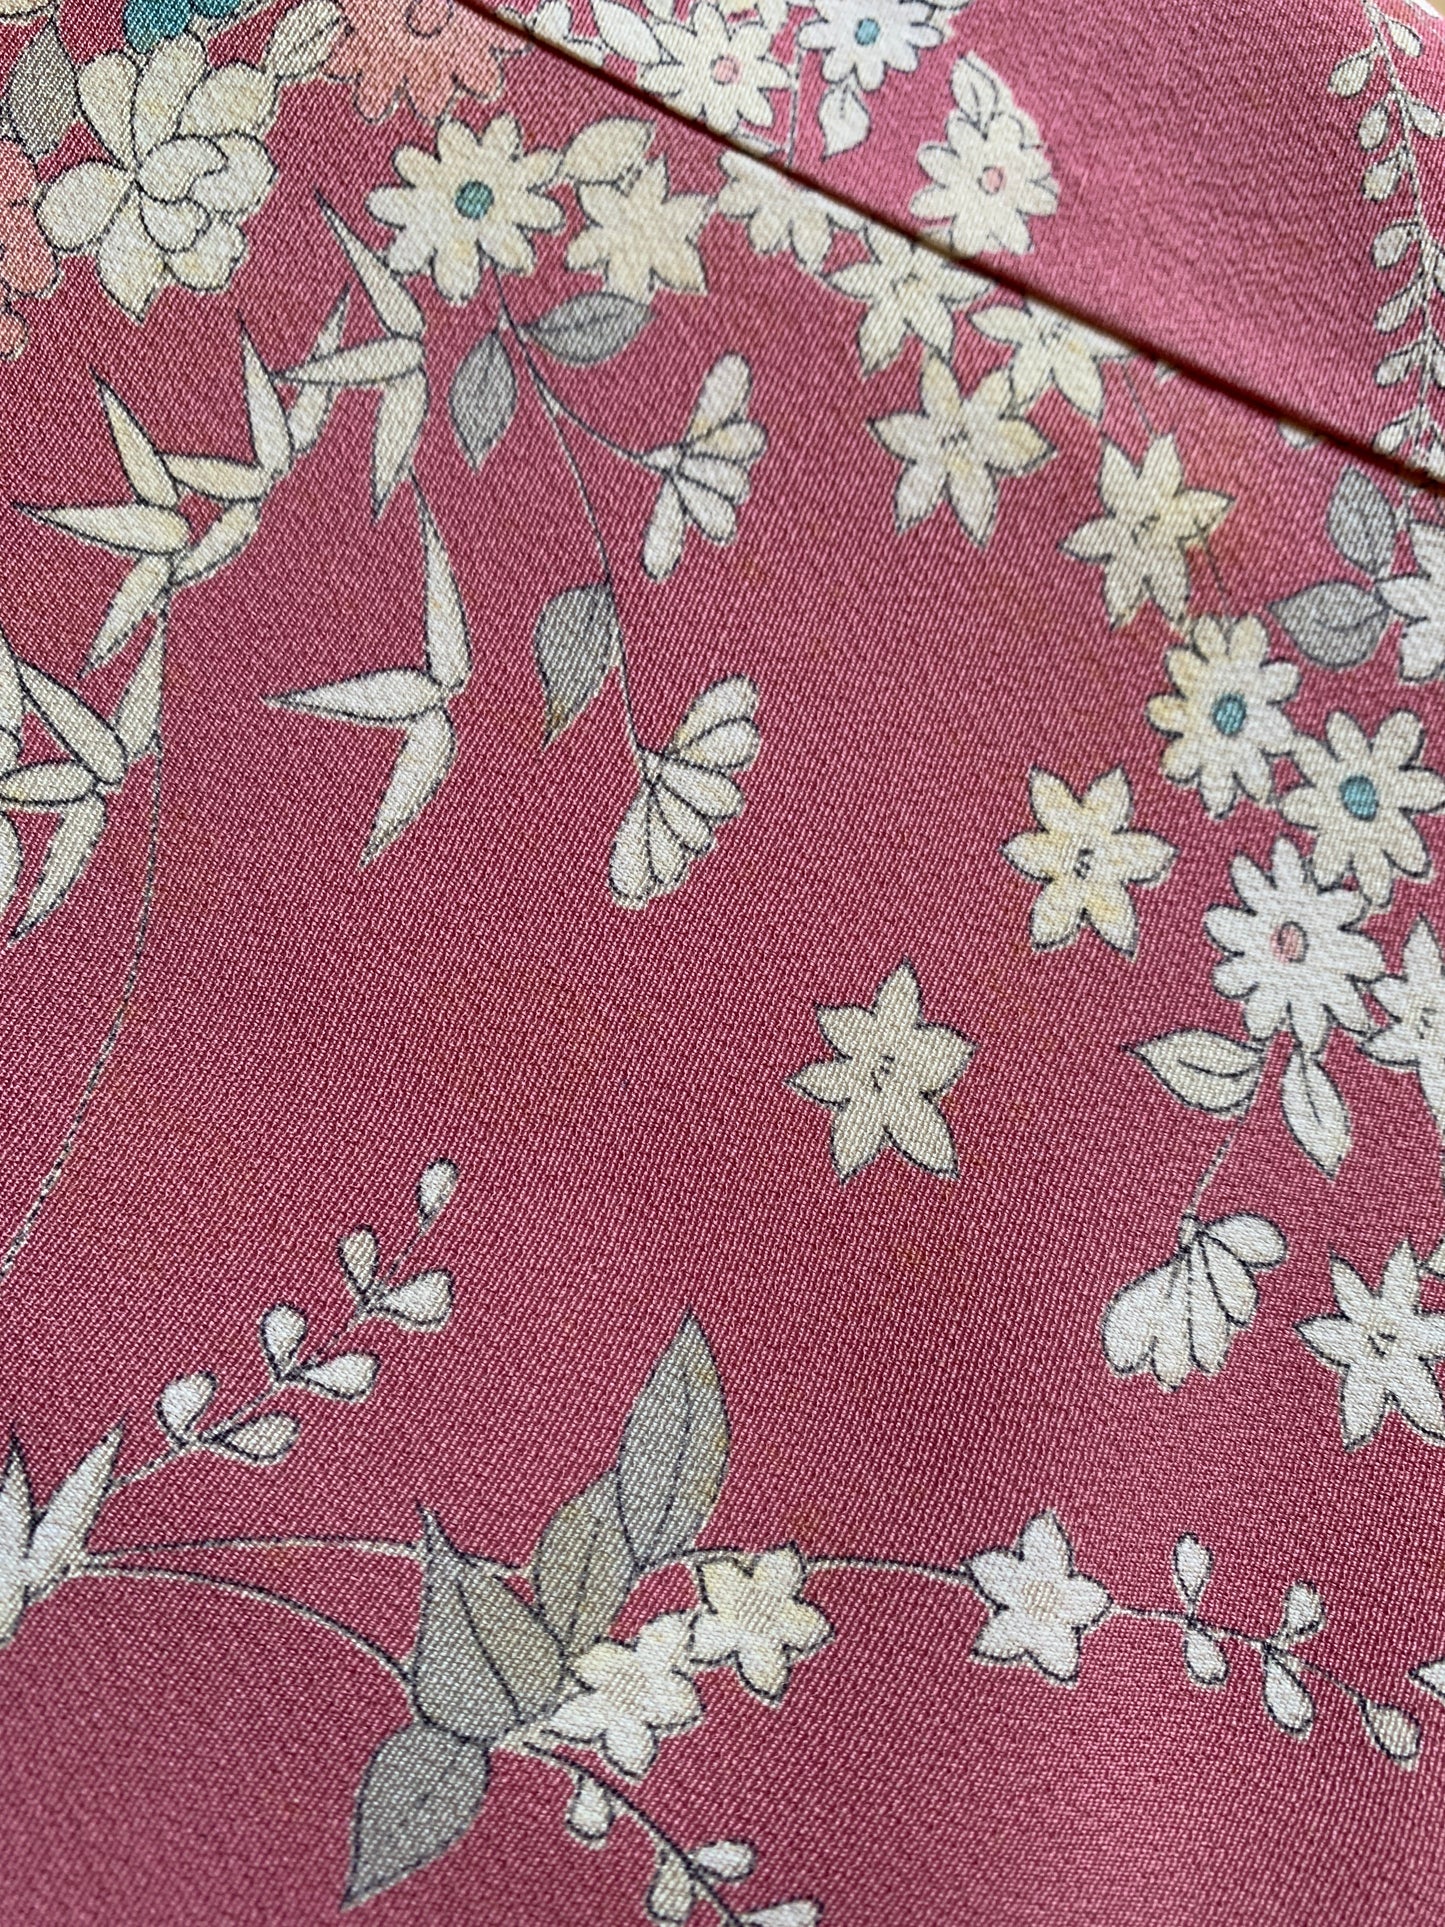 Kimono fabric for custom dress order, fabric #73